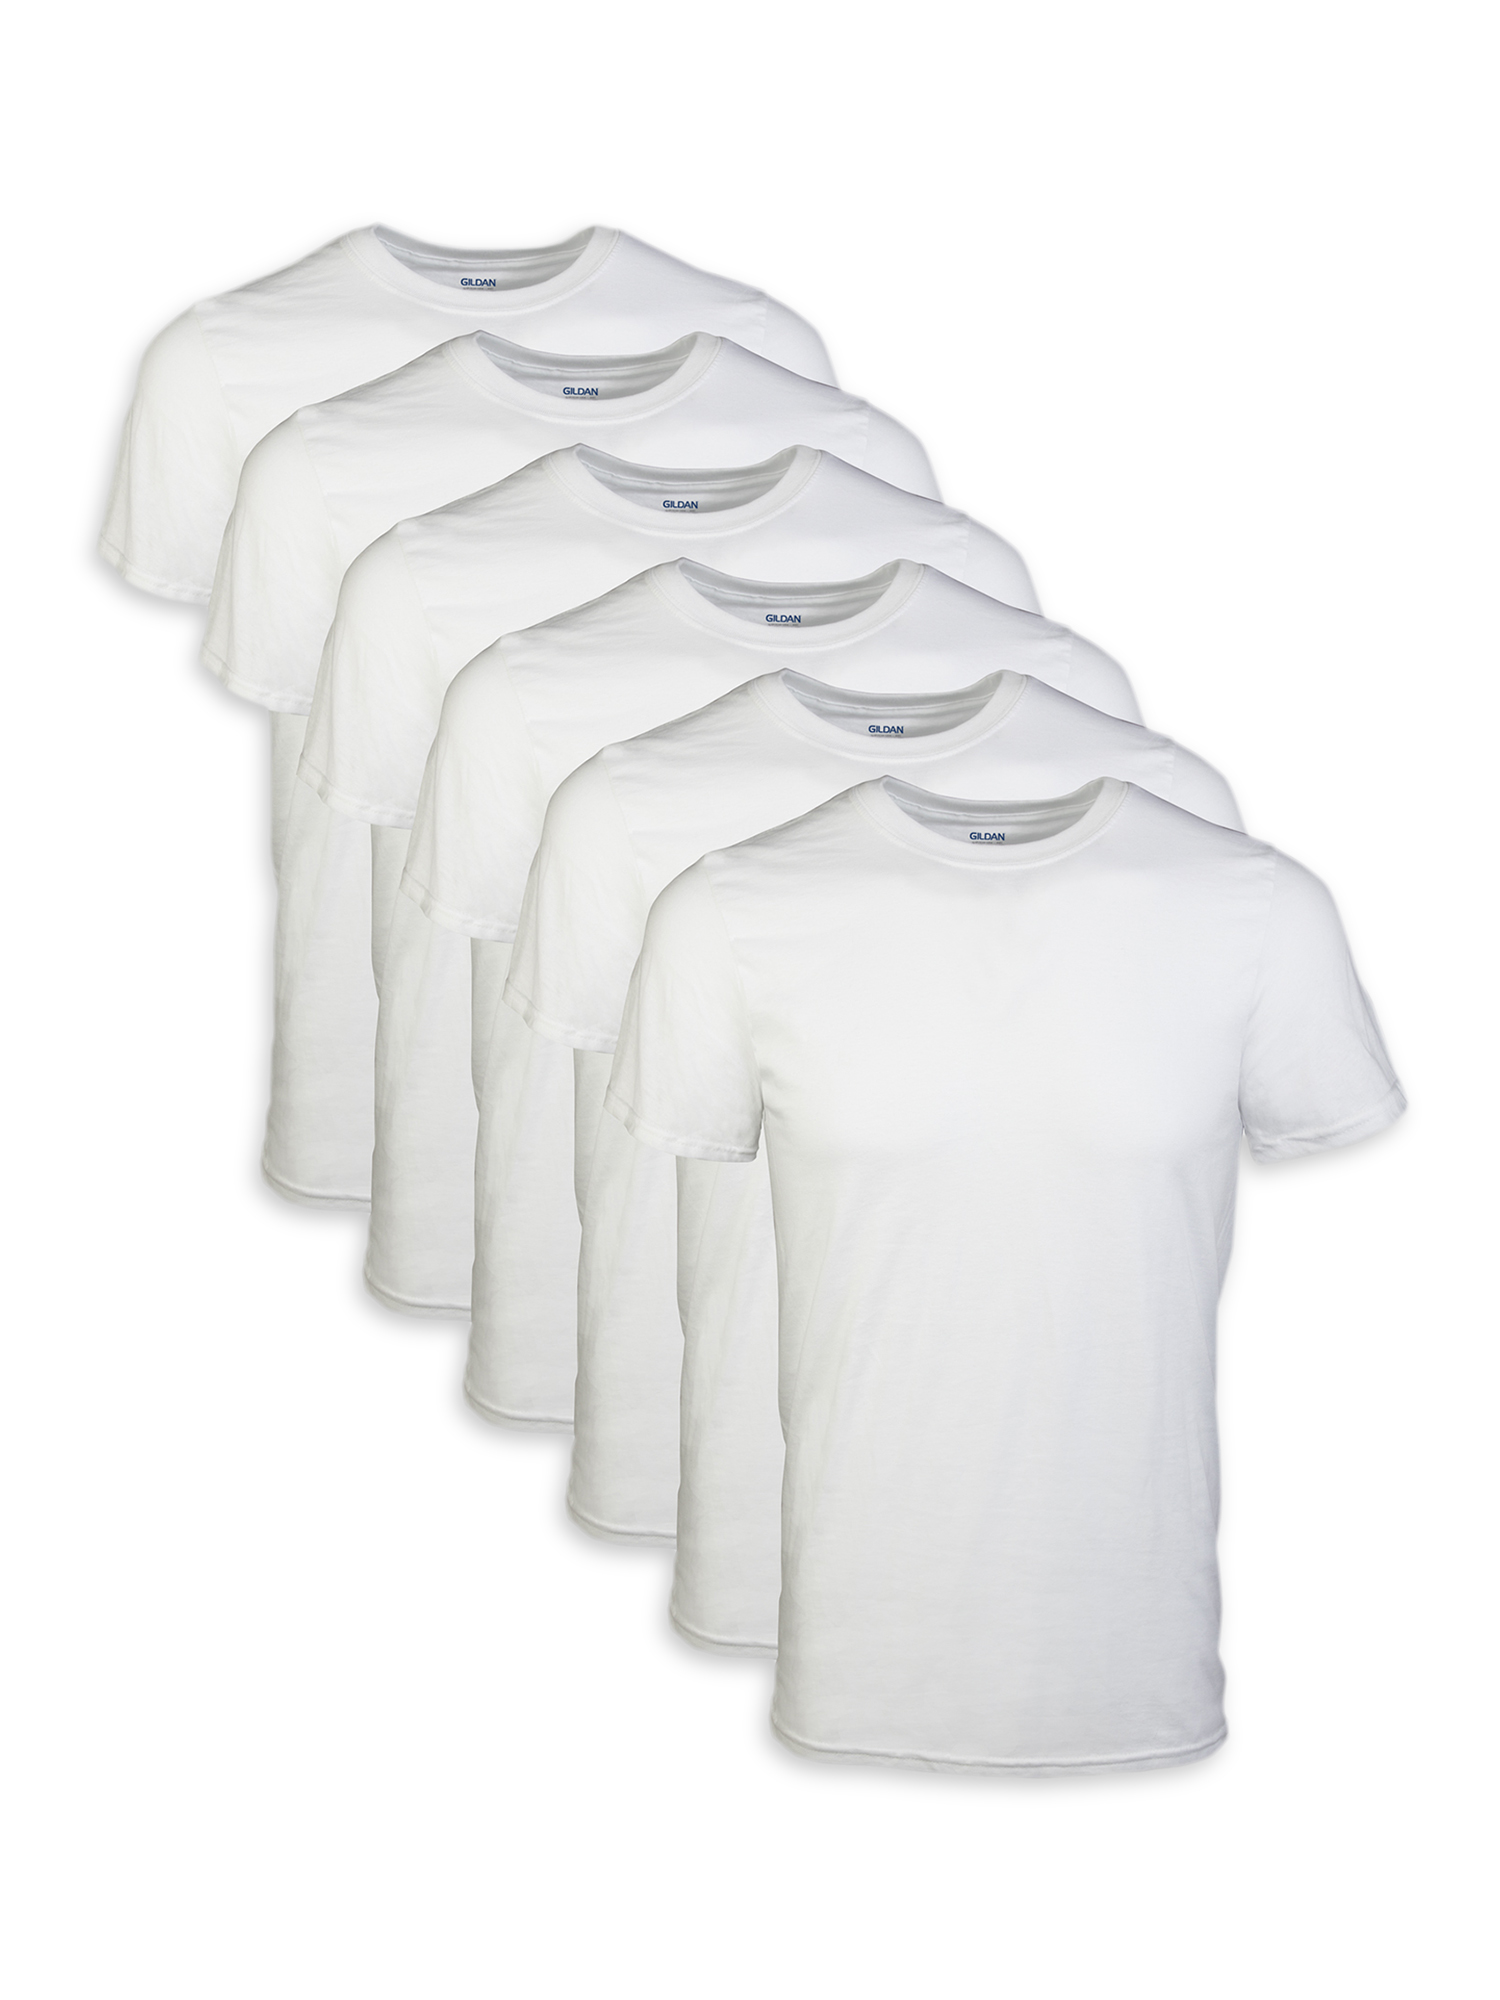 Gildan Adult Men's Short Sleeve Crew White T-Shirt, 6-Pack, Sizes S-2XL - image 1 of 4